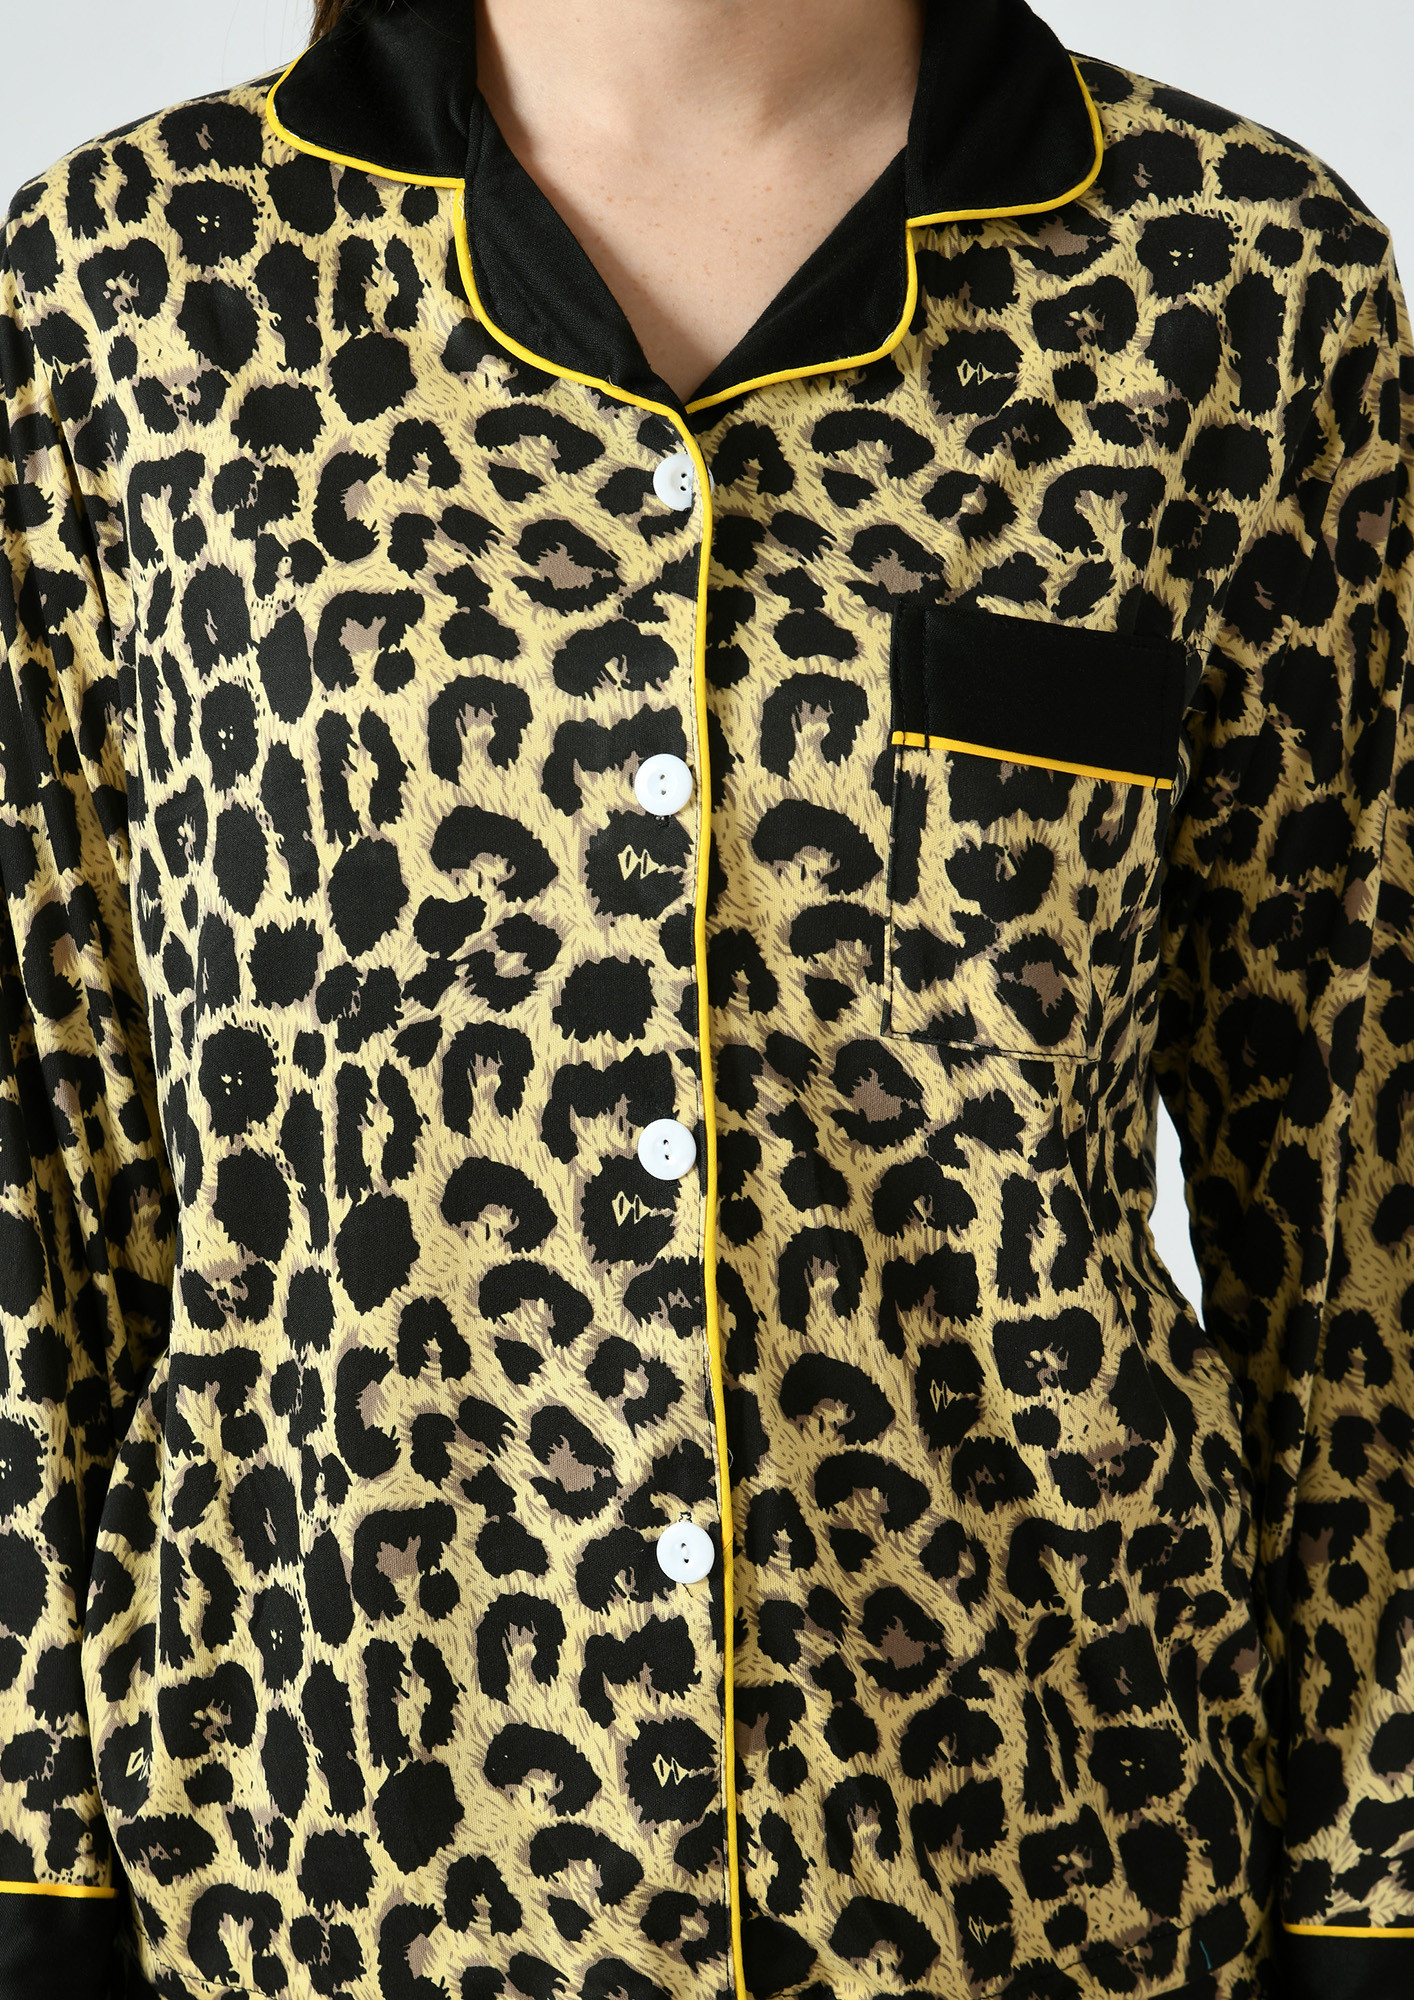 Buy LOODY'S Women's Digital Leopard/Cheetah Print Night Dress | Women  Camouflage Satin Night Suit |Top and Pyjama Set for Girls Black at Amazon.in